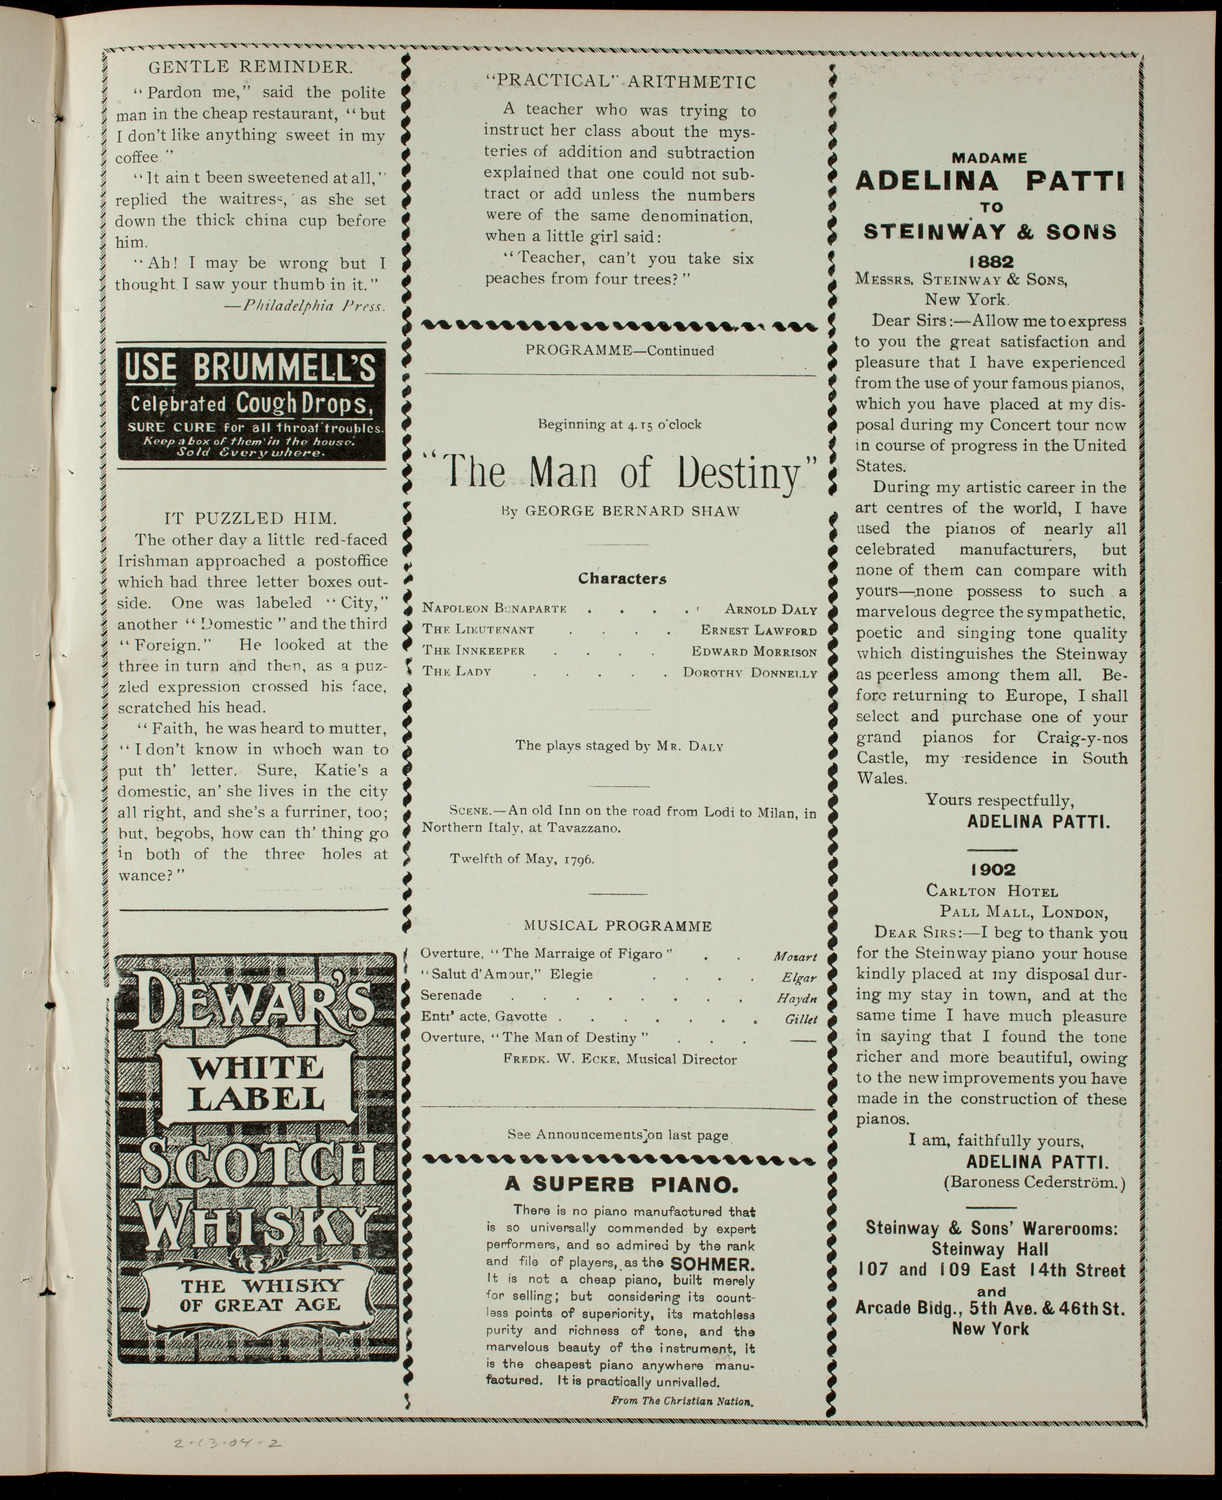 Amateur Comedy Club, February 13, 1904, program page 3